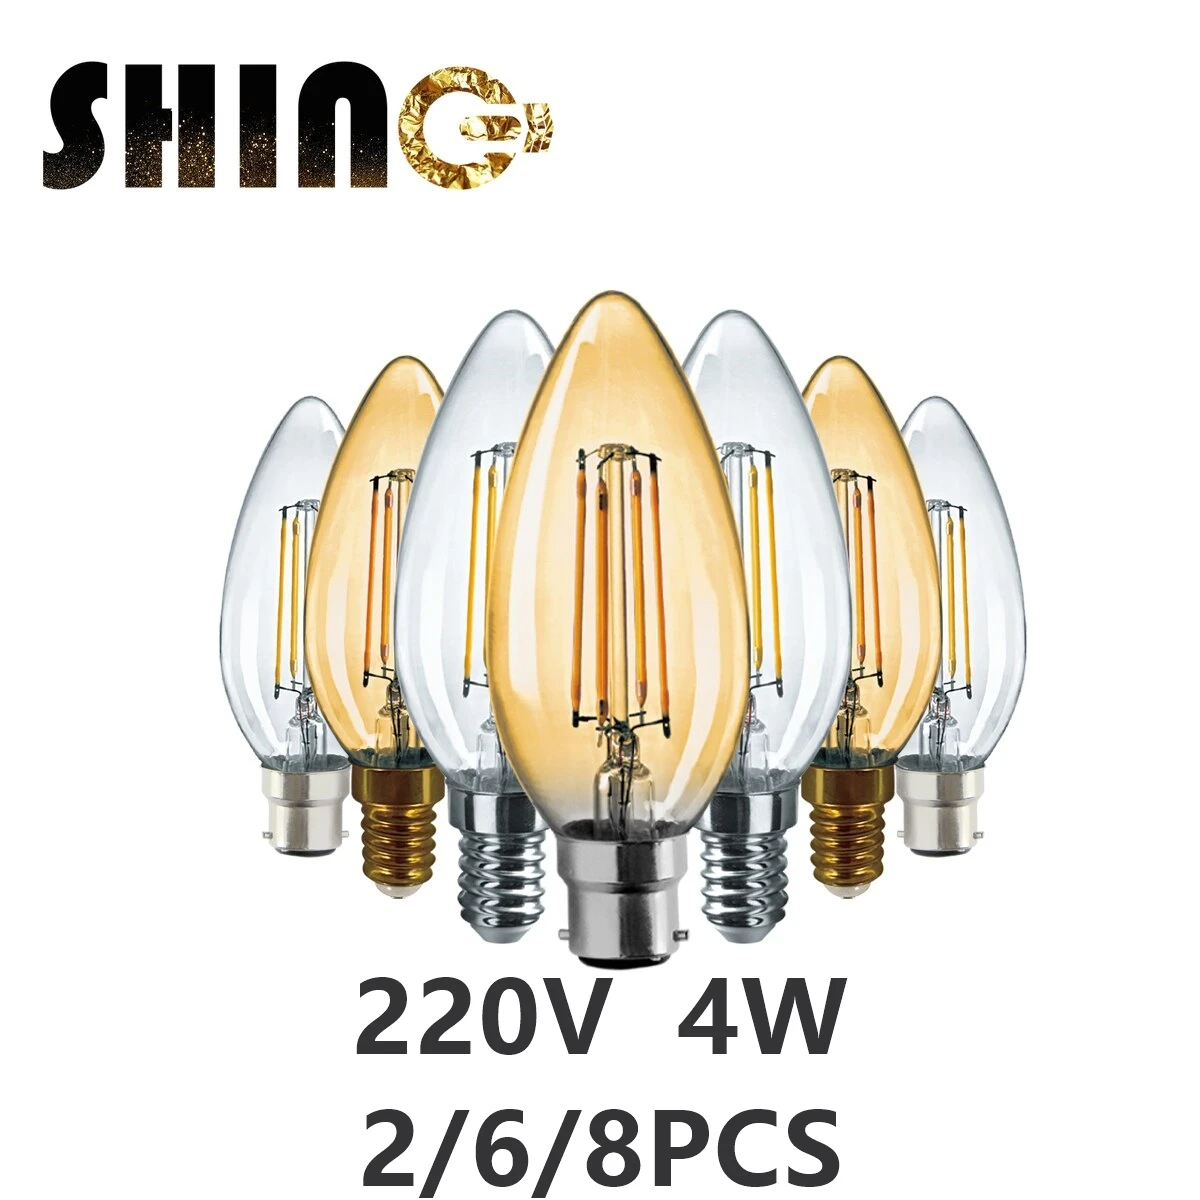 8 Pcs/lot Lampara Ampoule Led 220V Filament Bulb C35 4W Retro Edison Lamp  B22 Bombillas Vintage Lamp 2700k Led Bulbs for House|Incandescent Bulbs| -  AliExpress